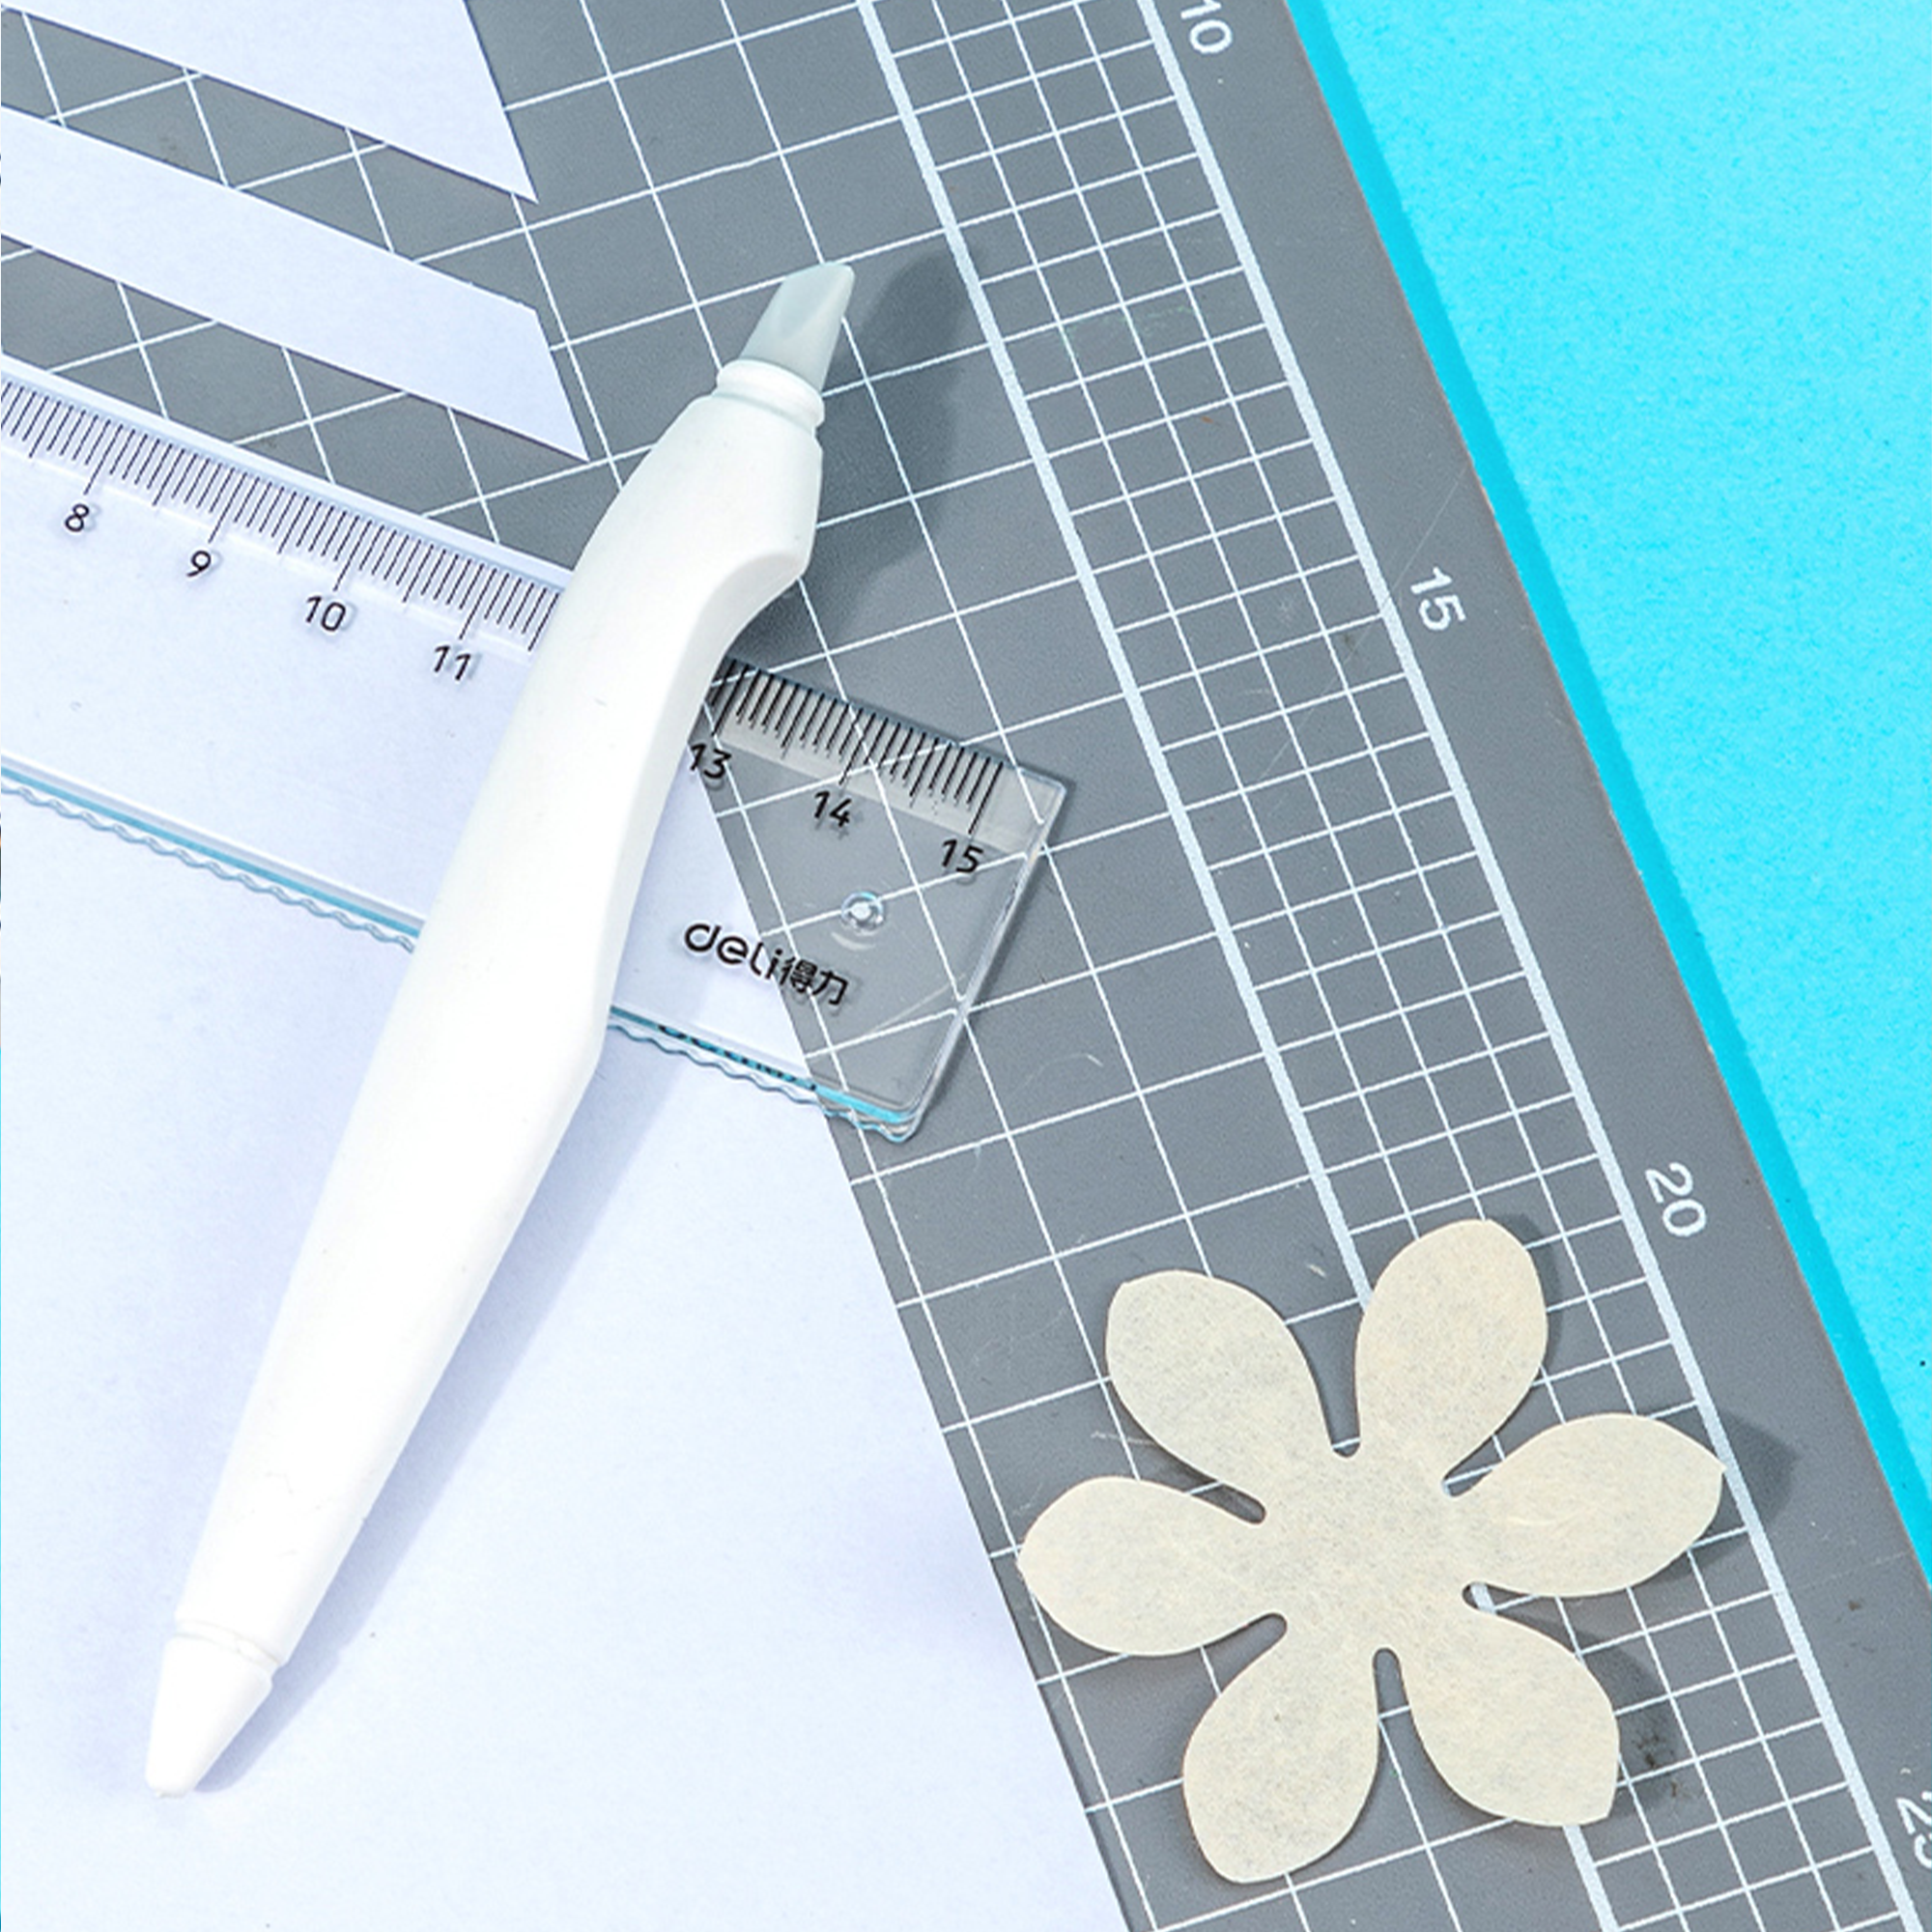 Ceramic Tip Pencil Utility Knife For paper crafts